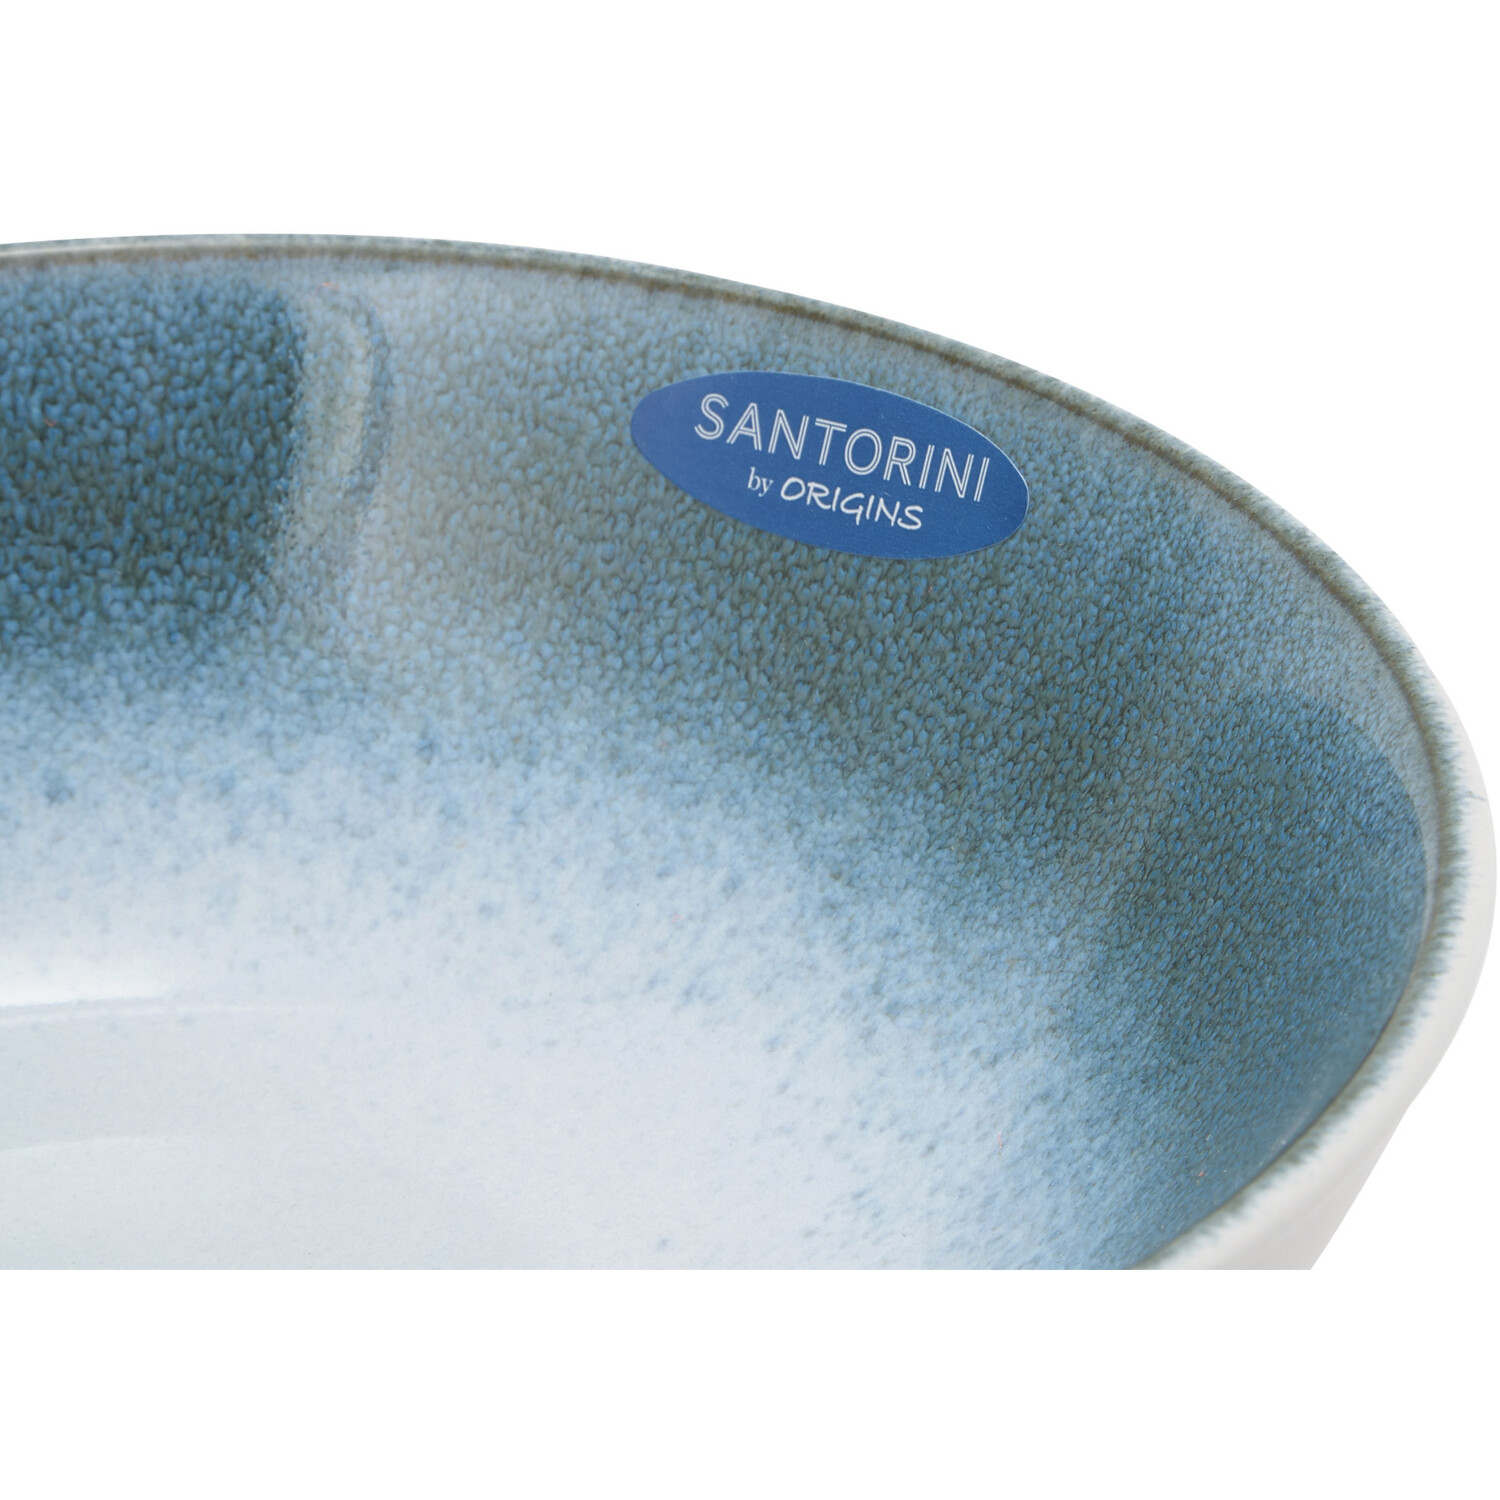 Santorini Reactive Glaze Pasta Bowl - Blue Image 3